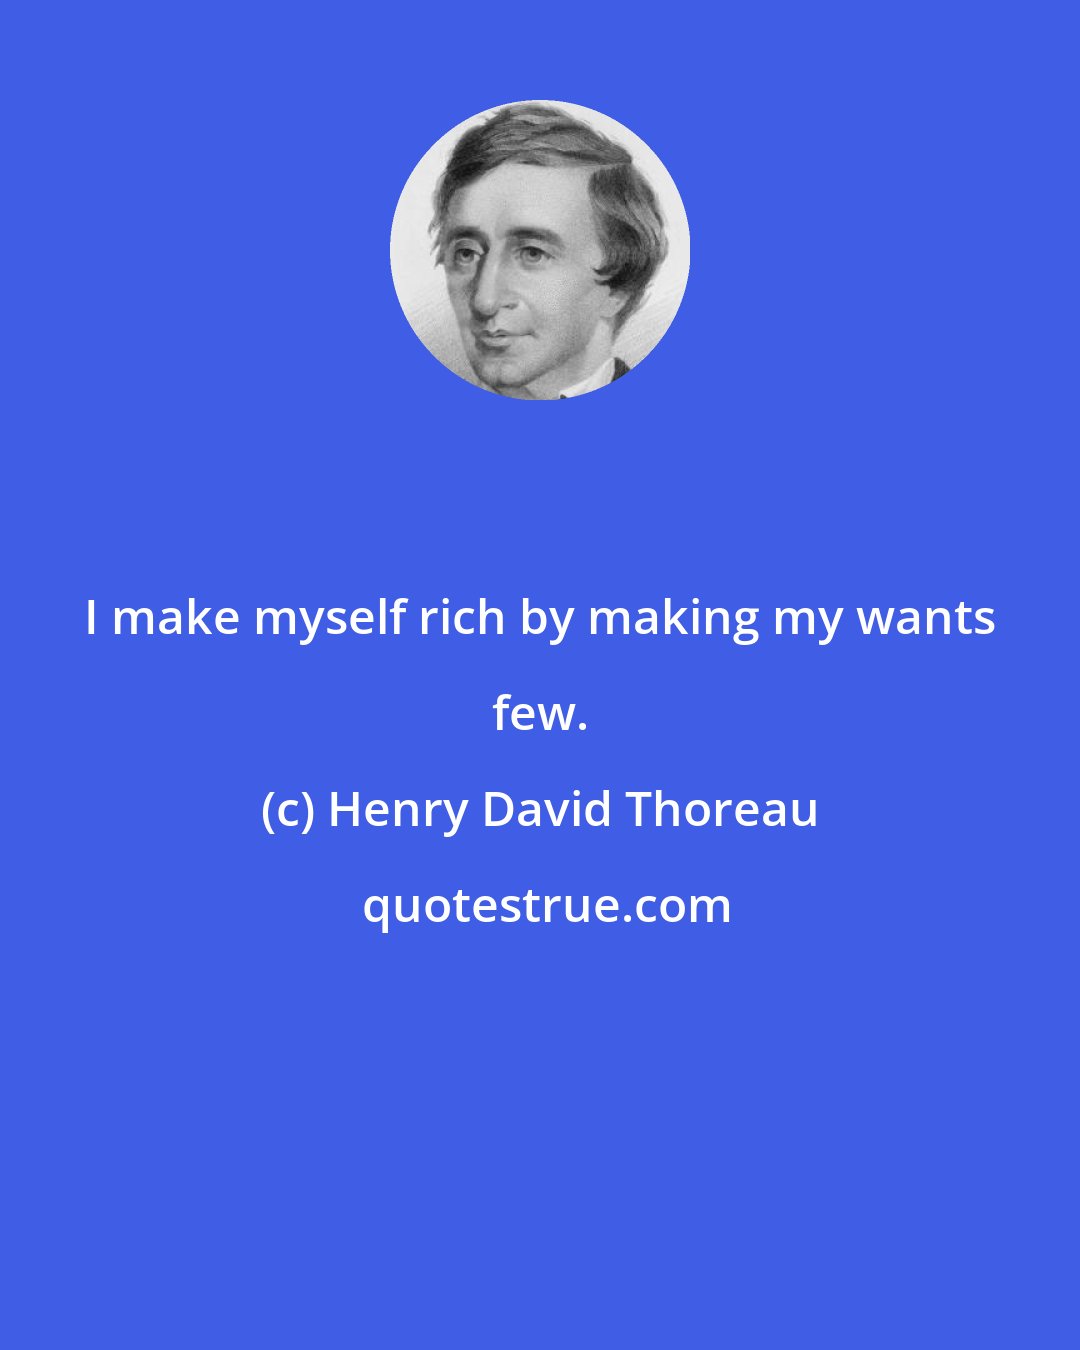 Henry David Thoreau: I make myself rich by making my wants few.